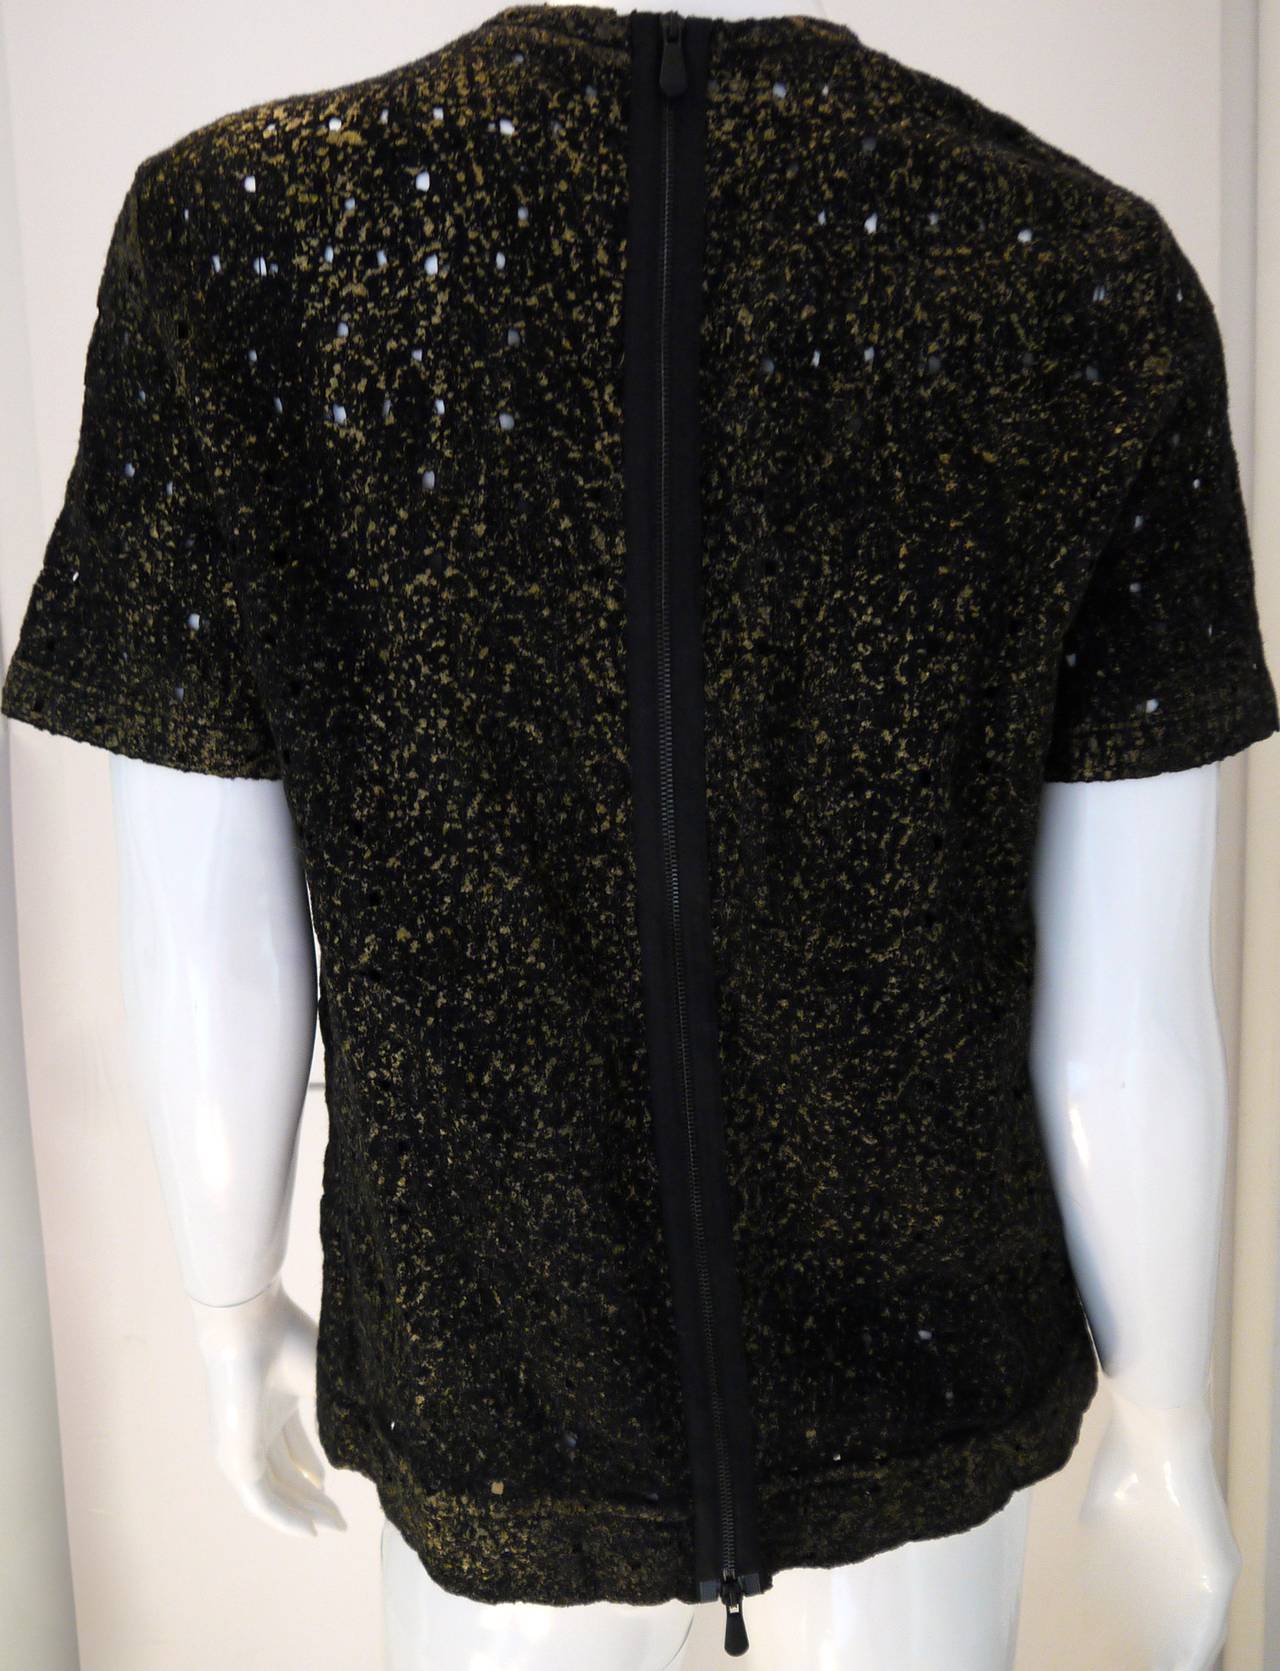 Women's Bottega Veneta Black and Gold Shirt - Size 42